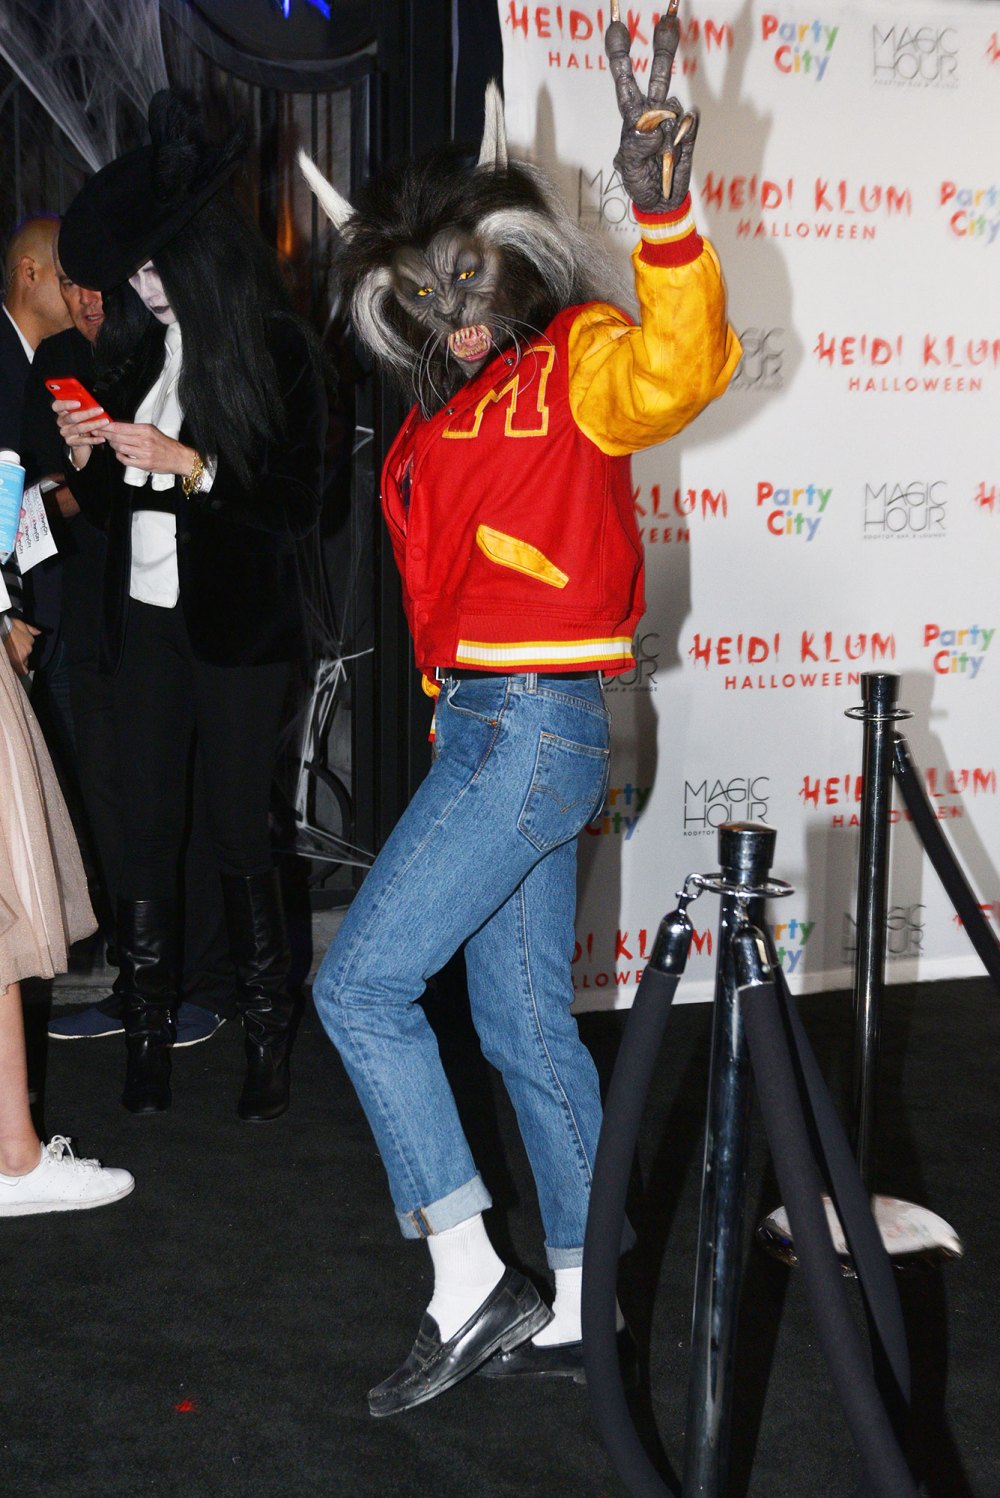 Heidi Klum Dresses as Michael Jackson in ‘Thriller’ for Halloween 2017: Photo